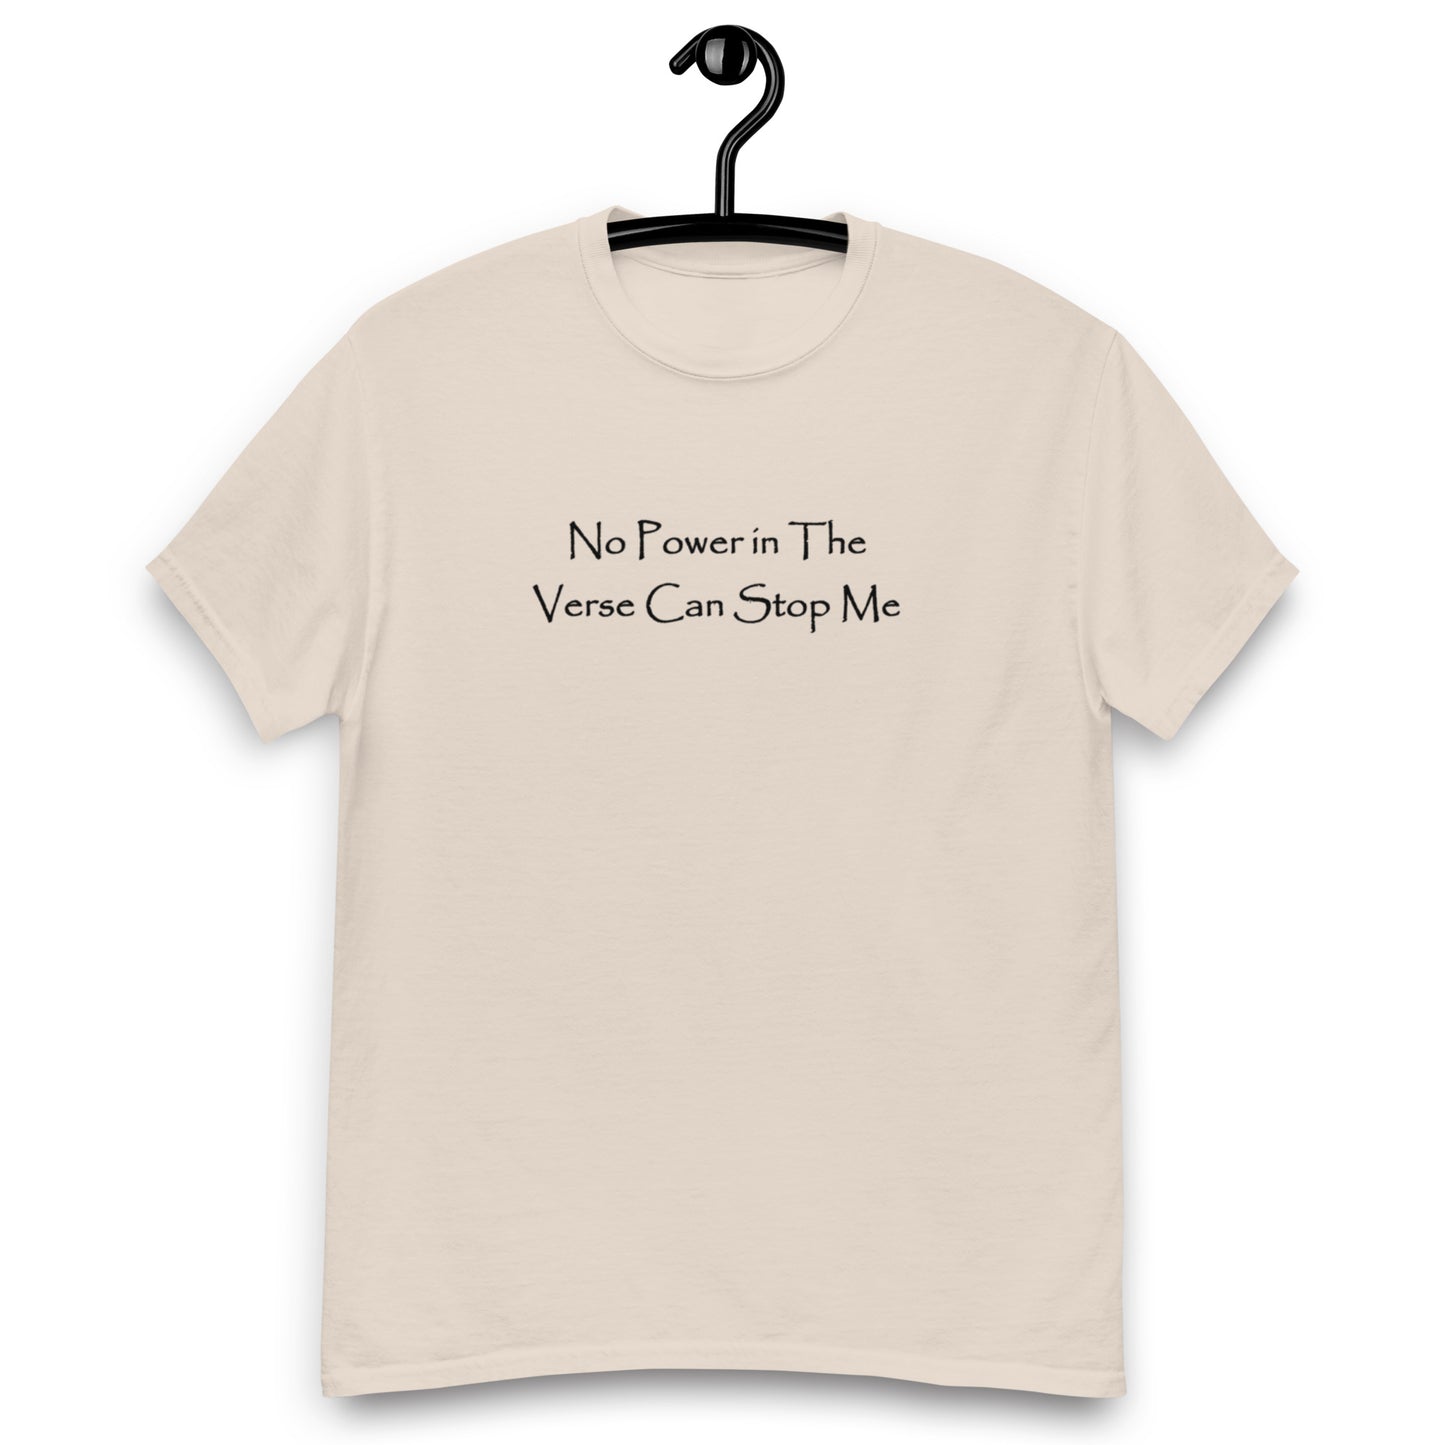 Men's Light T-Shirt - No Power in the Verse